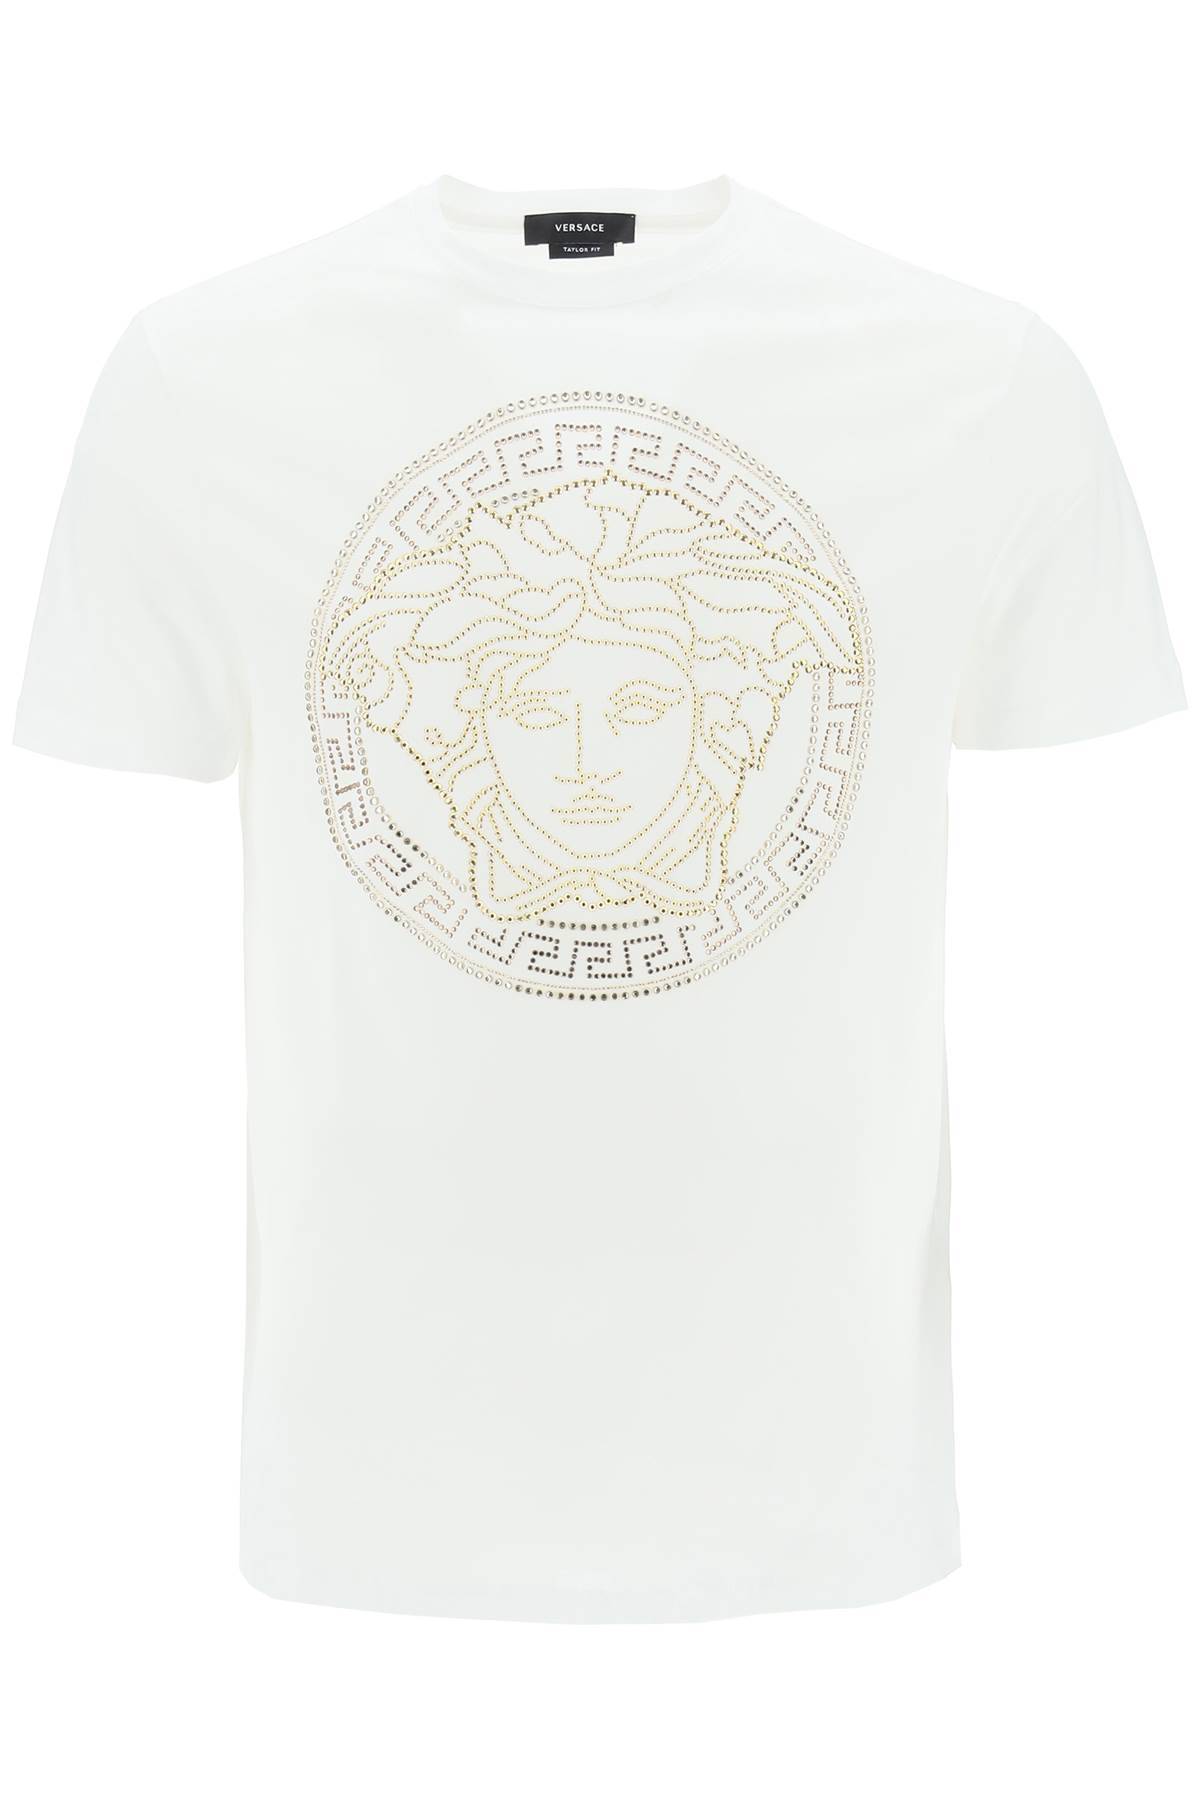 Versace VERSACE medusa-studded taylor fit t-shirt